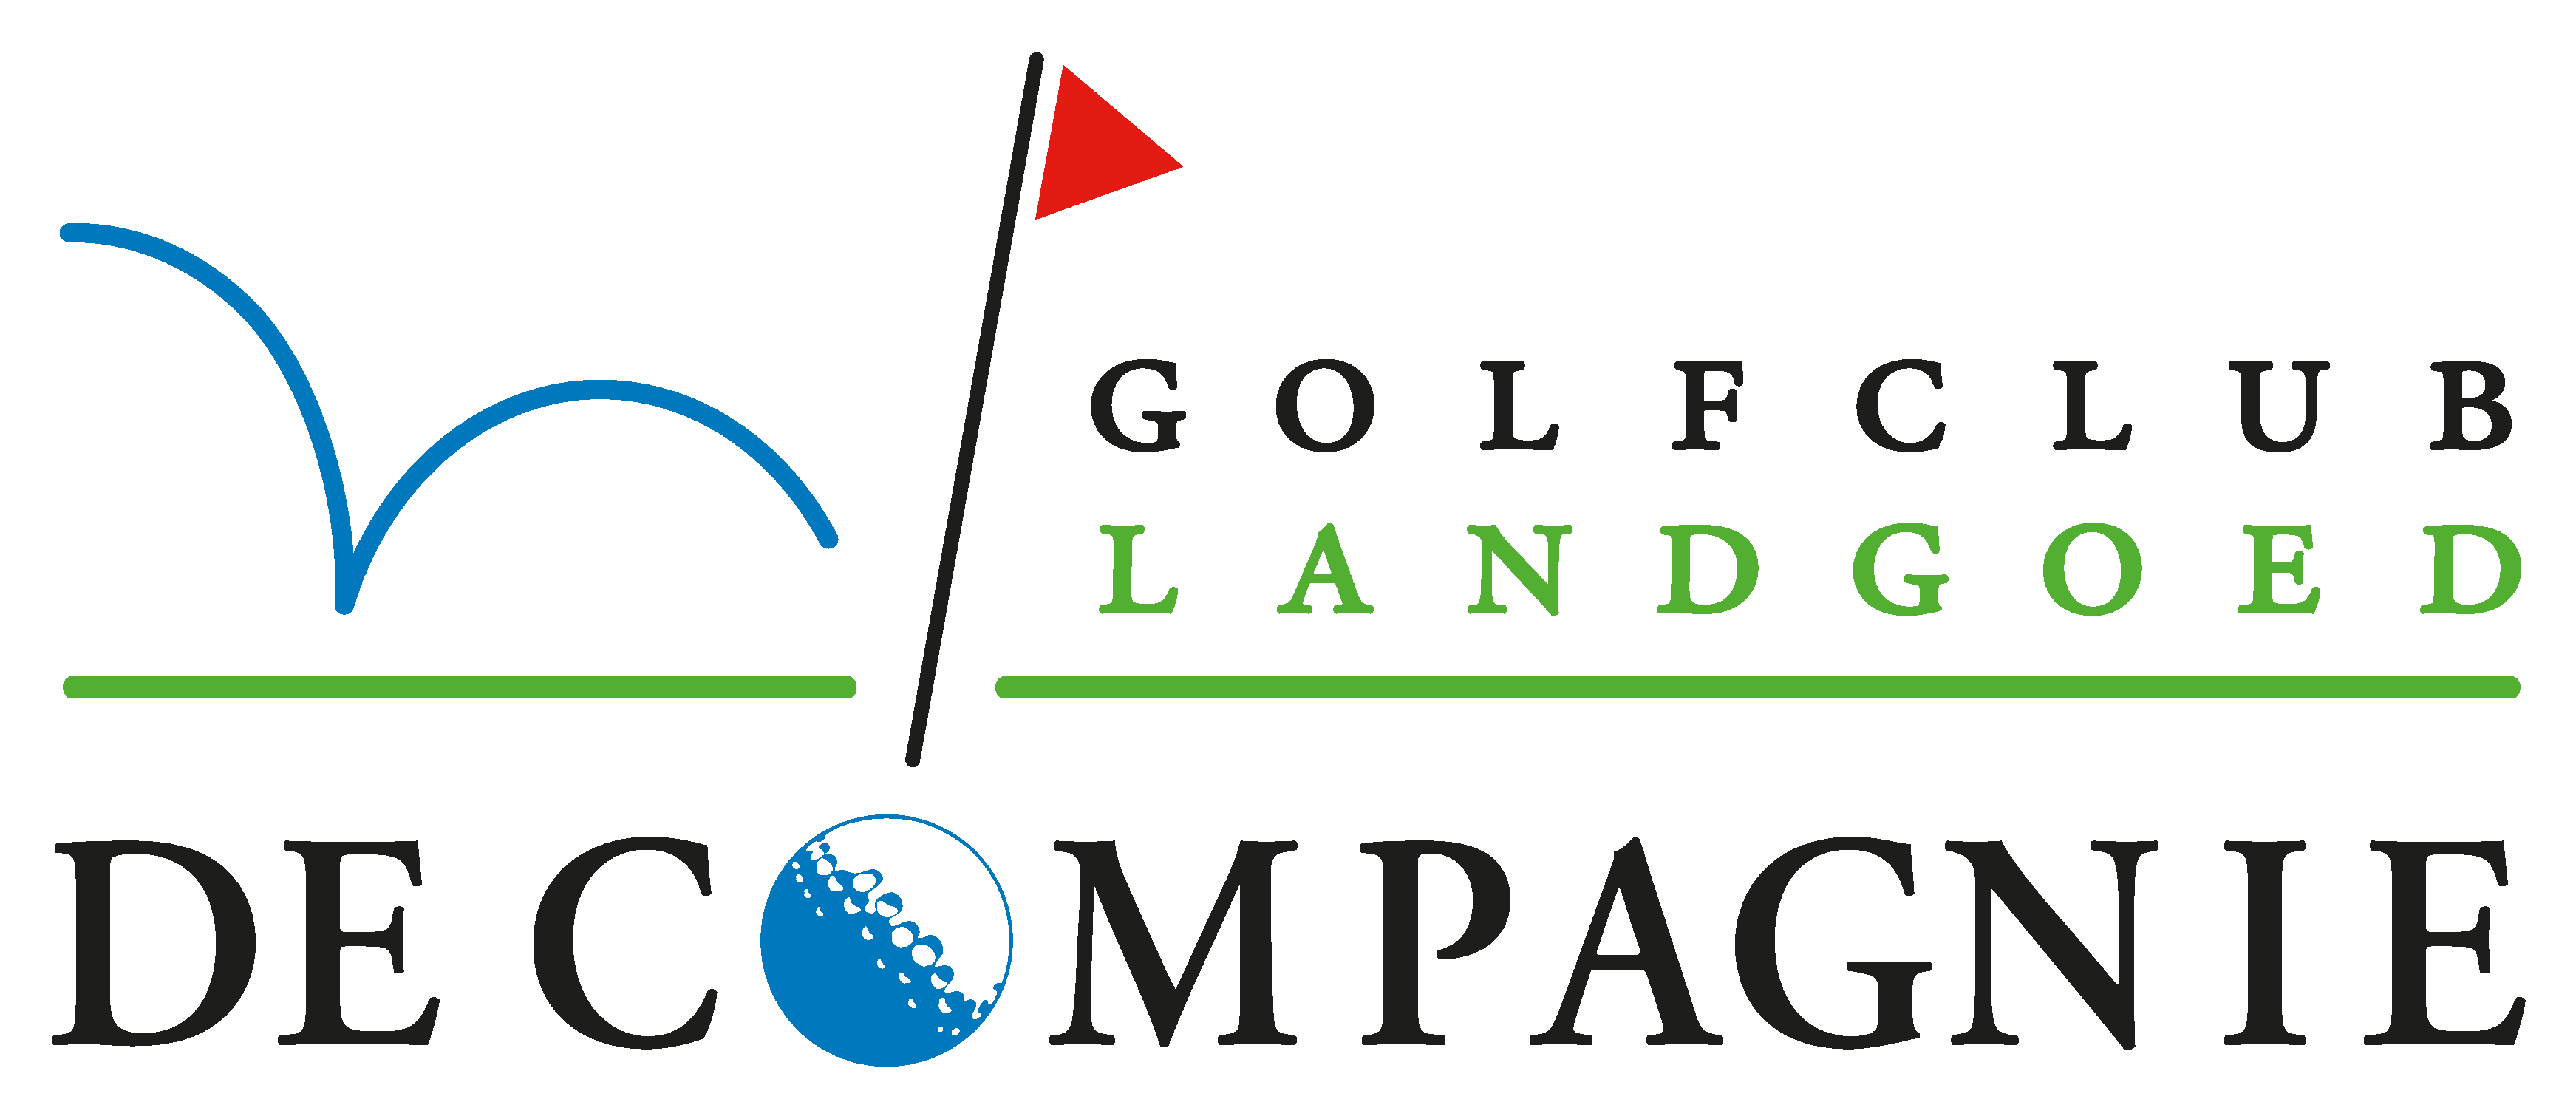 Golfclub Landgoed De Compagnie